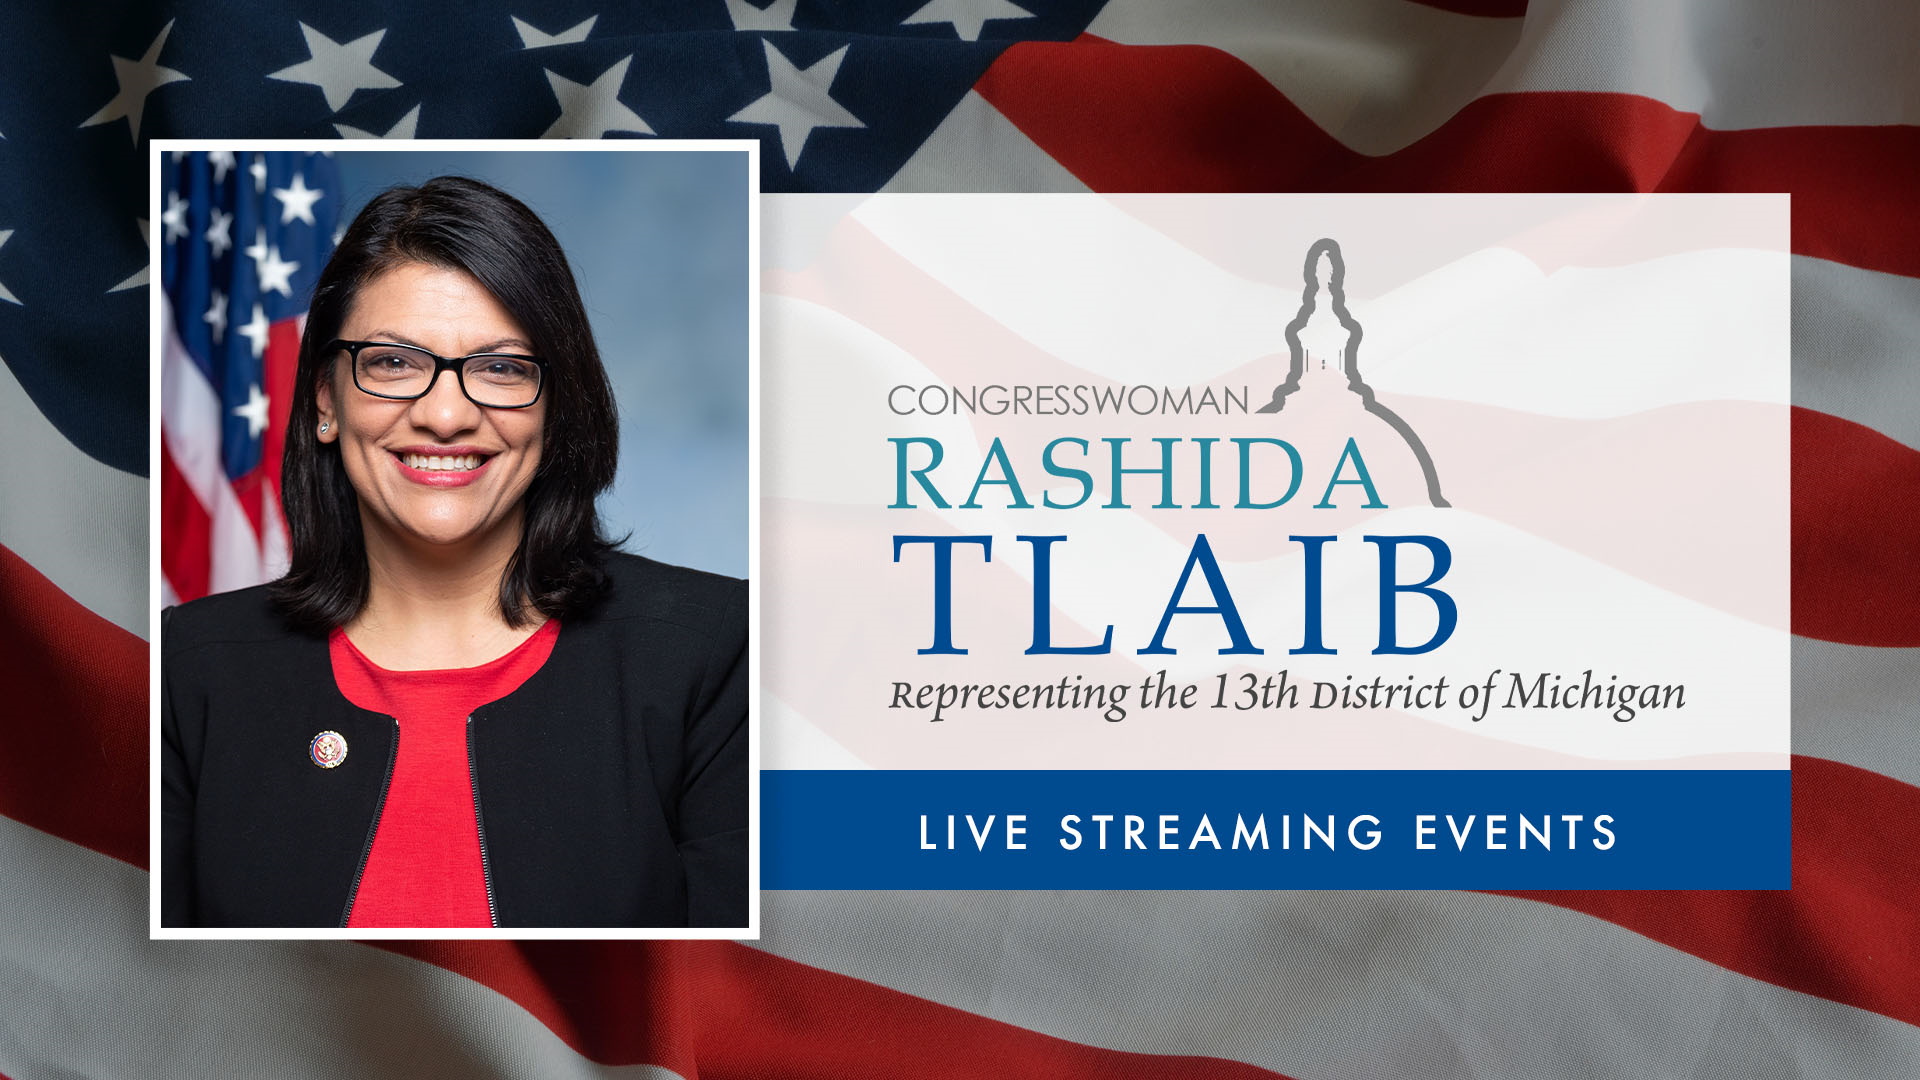 Congresswoman Rashida Tlaib